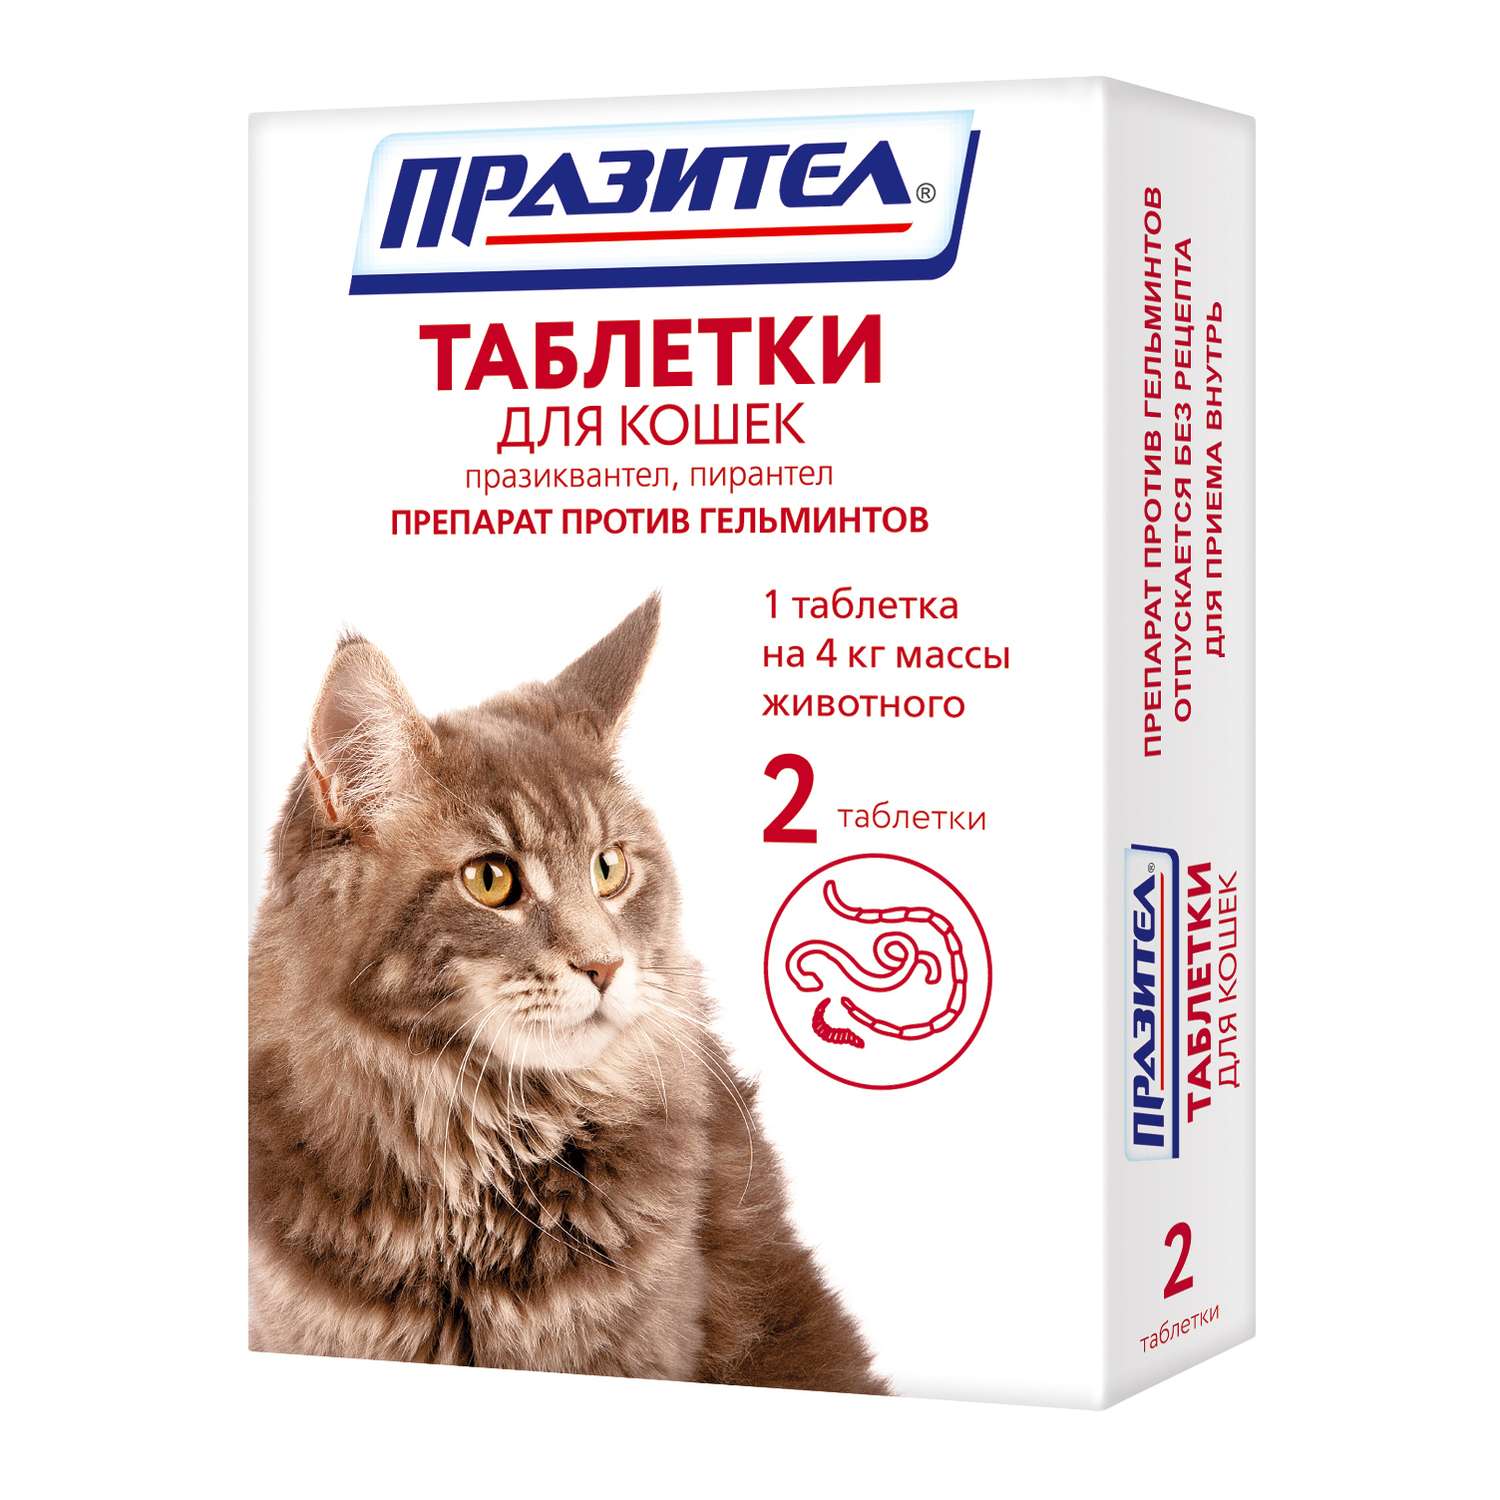 Препарат противопаразитный для кошек Астрафарм Празител 2таблетки - фото 1